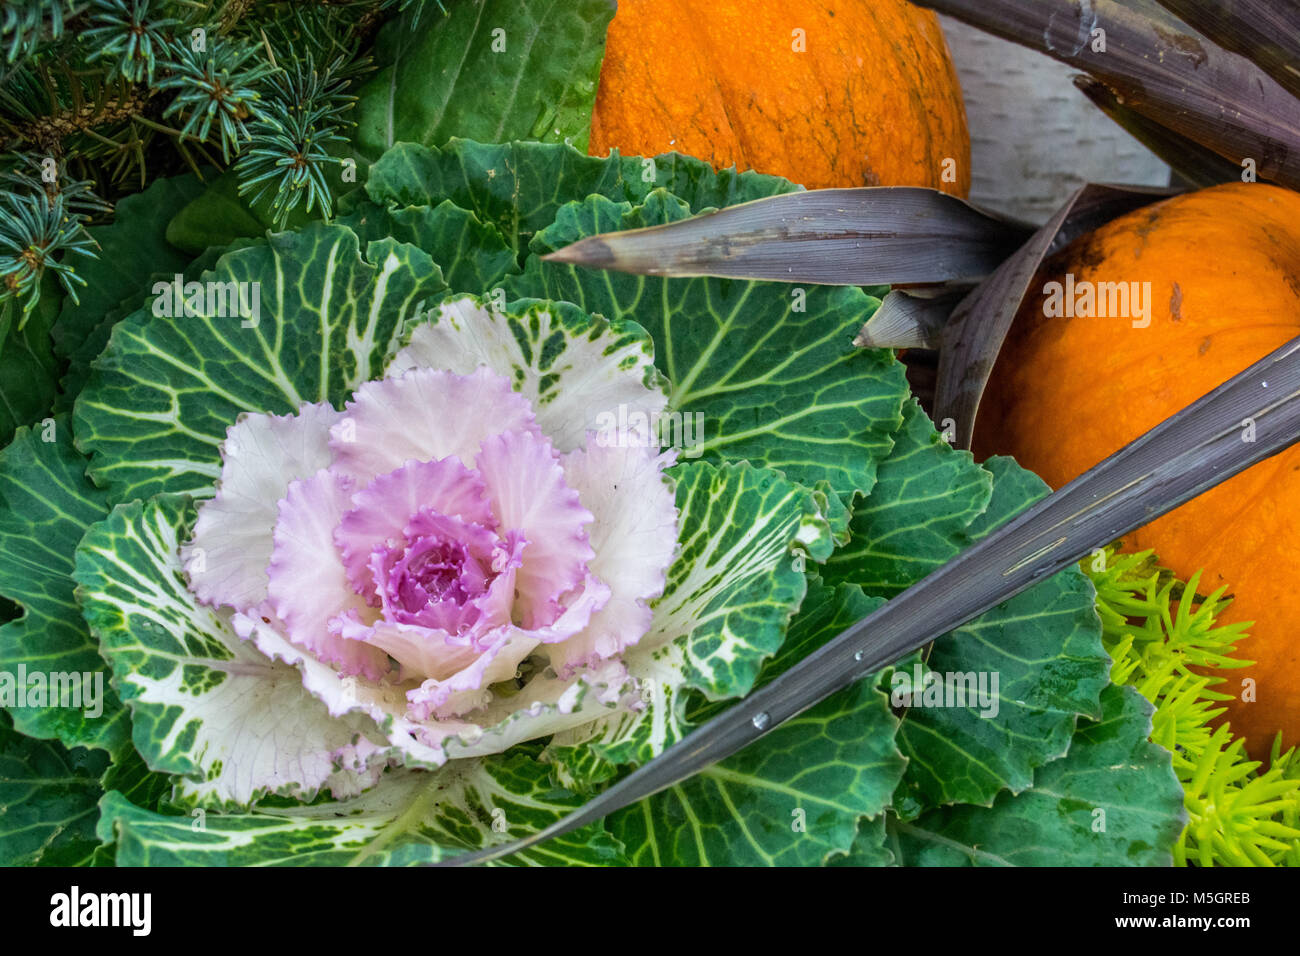 A display of Flowering Kale and Orange Pumpkins Stock Photo